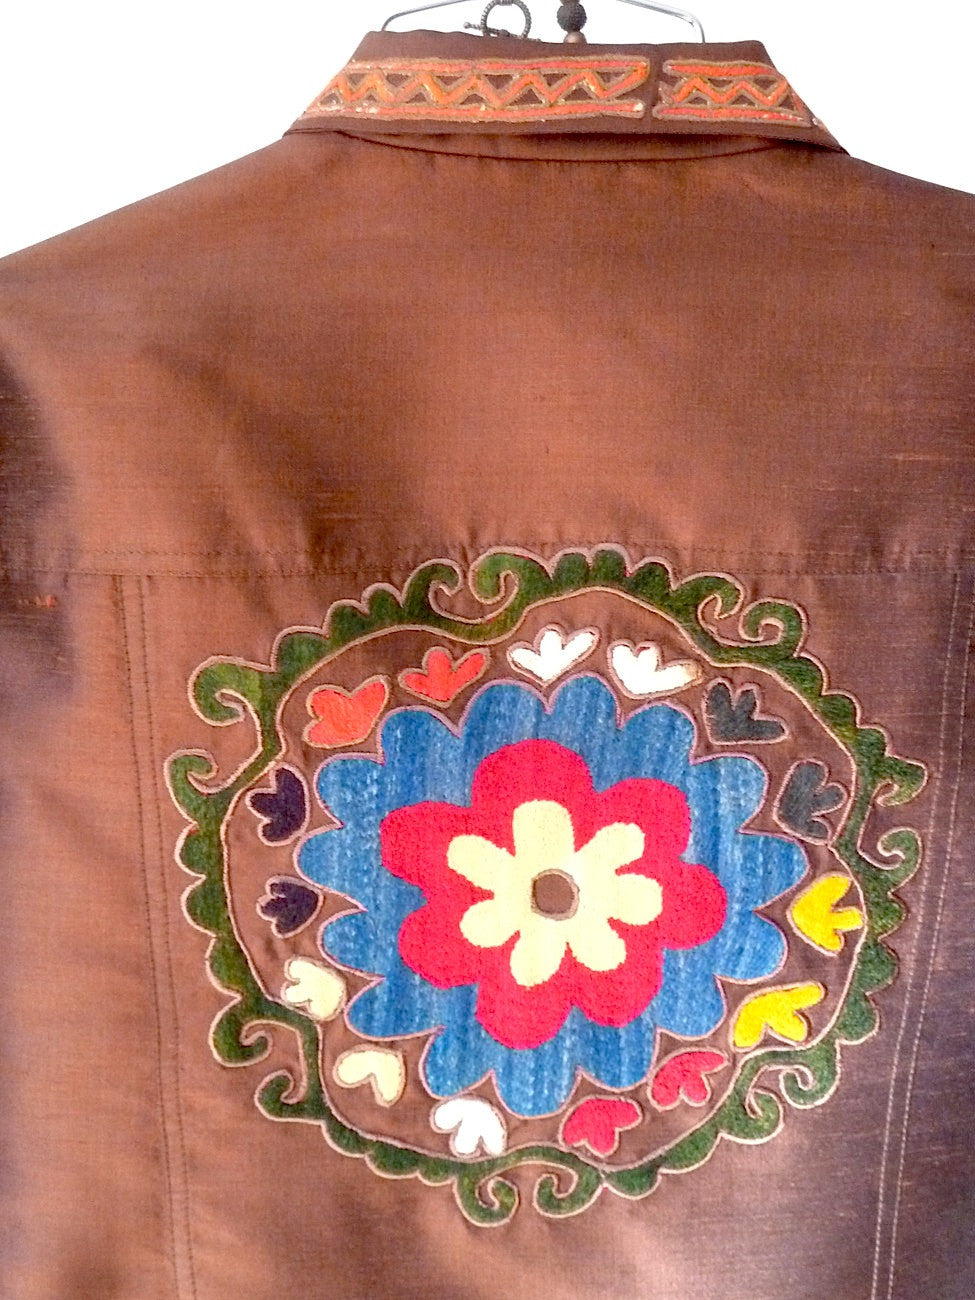 Jean Jacket Vintage Suzani Embroidery Orange Fuchsia